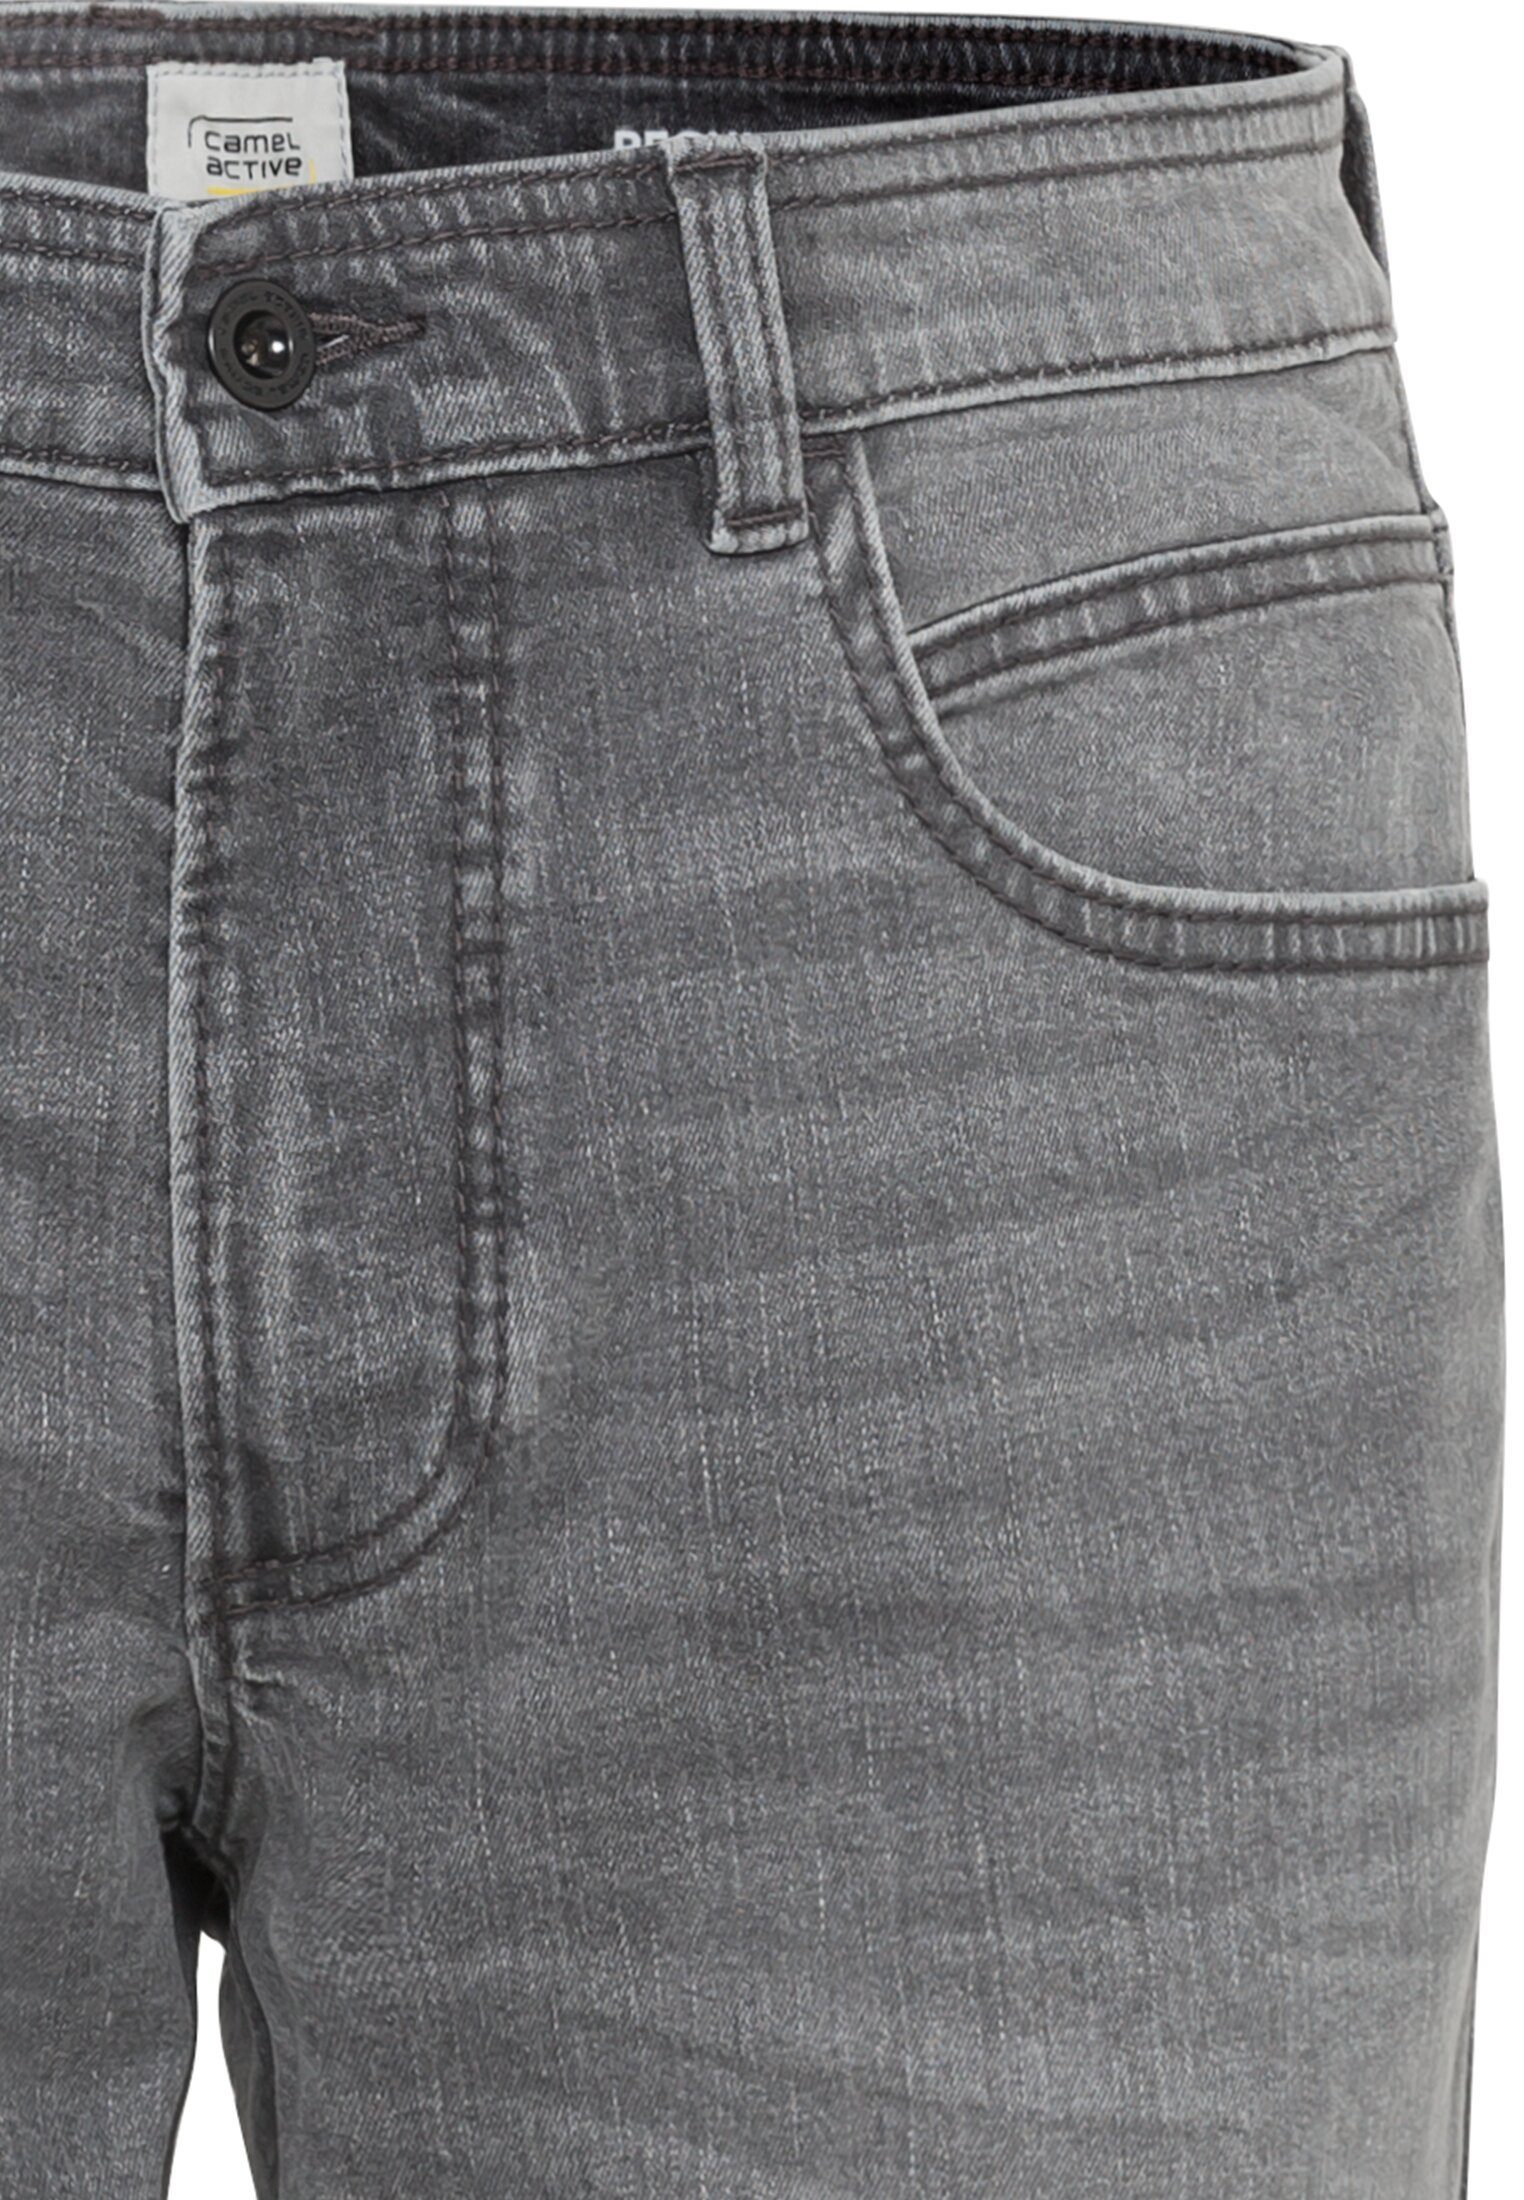 5-Pocket-Jeans graphite ACTIVE CAMEL 8D66.07 HOUSTON 488945 active camel grey